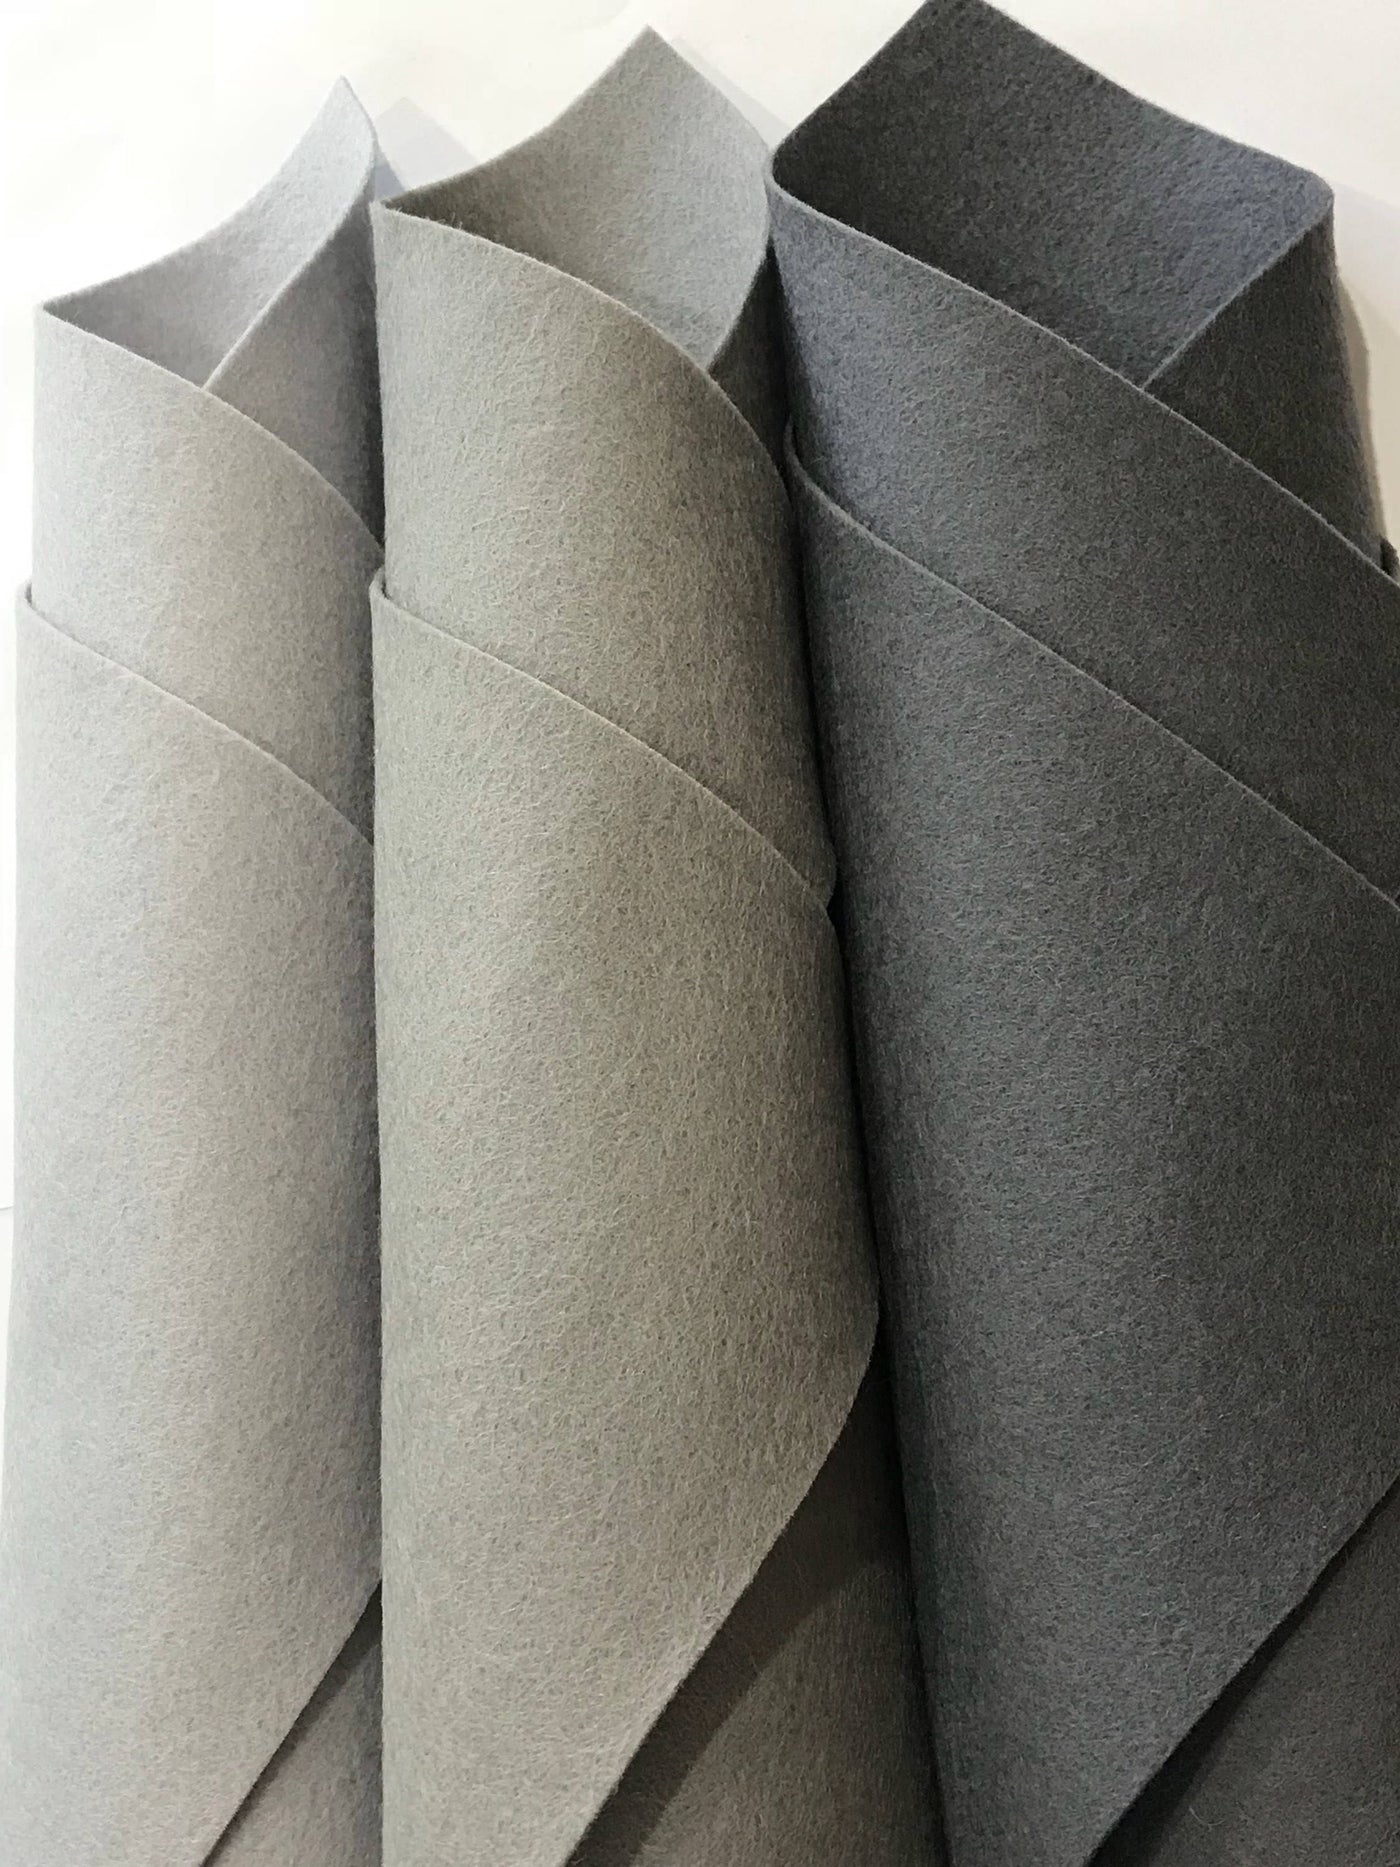 1mm Dark Grey Merino Wool Felt 8 x 11" Sheet - No. 39